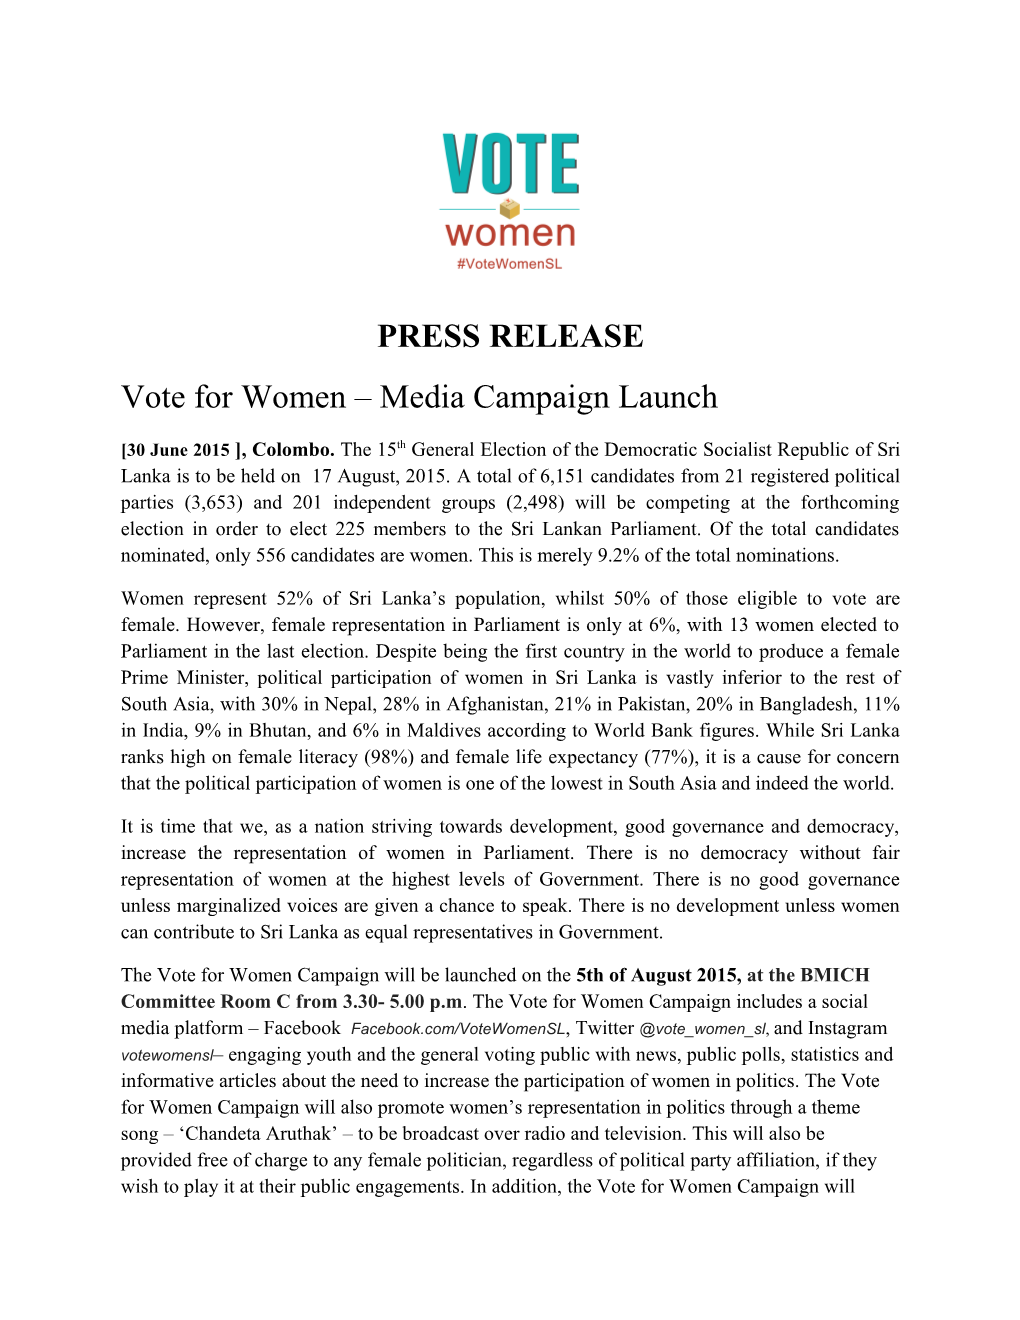 Vote for Women Media Campaign Launch